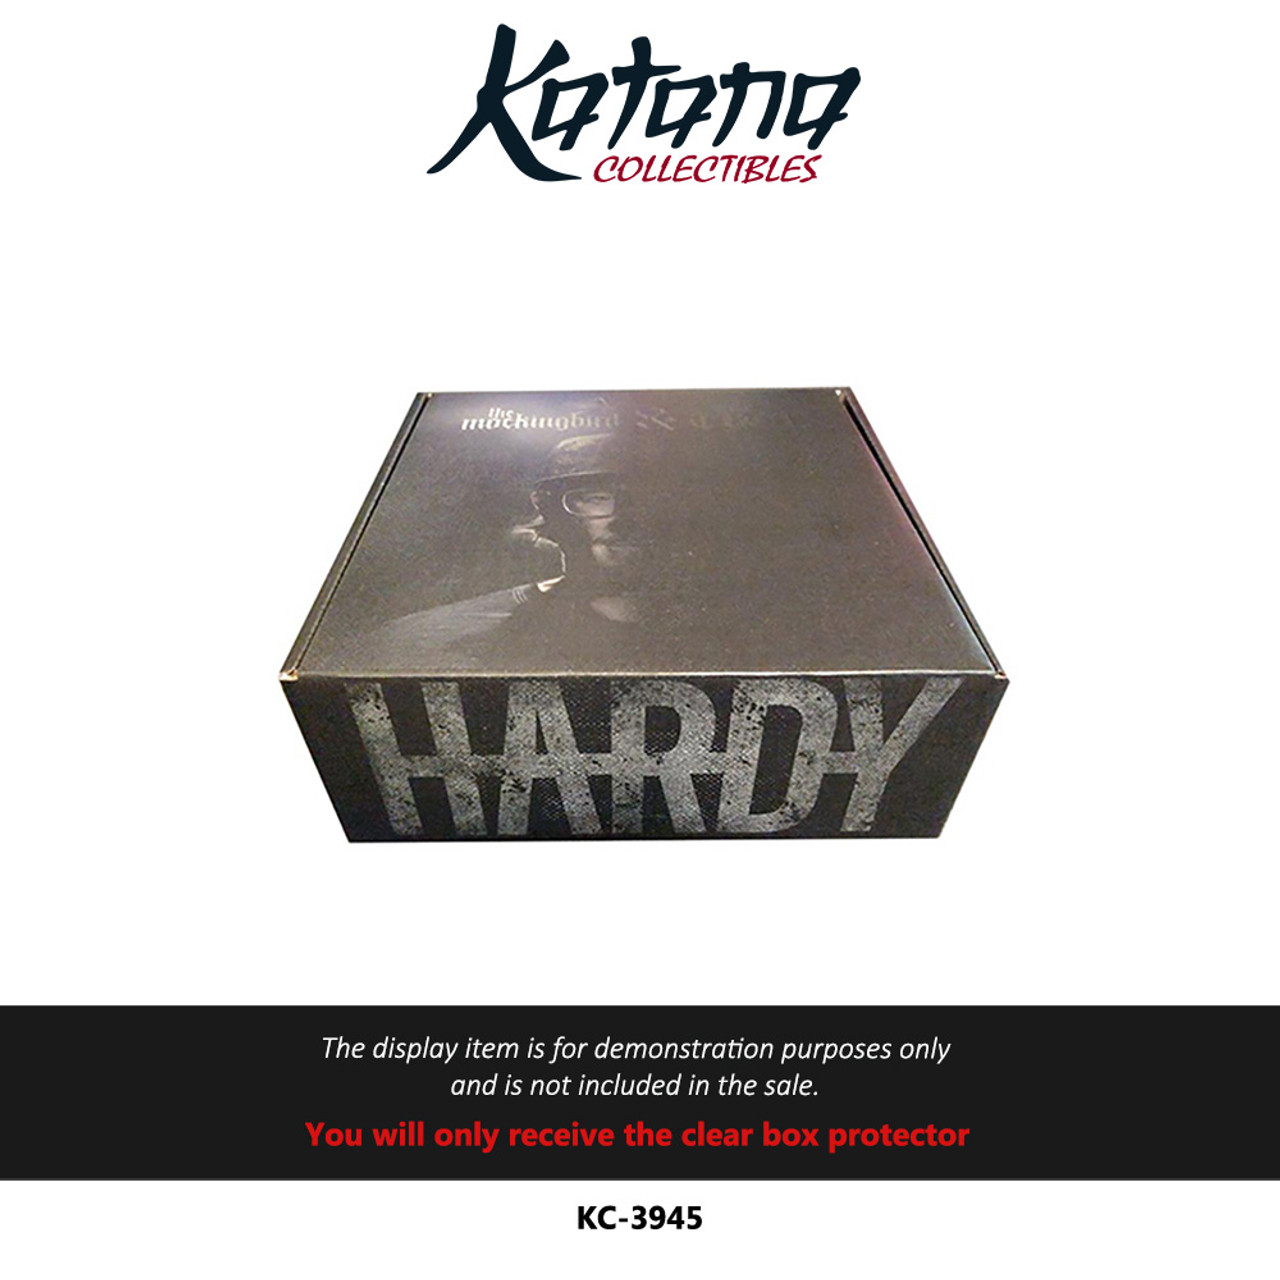 Katana Collectibles Protector For Hardy The Crow and The Mockingbird Vinyl Box Set